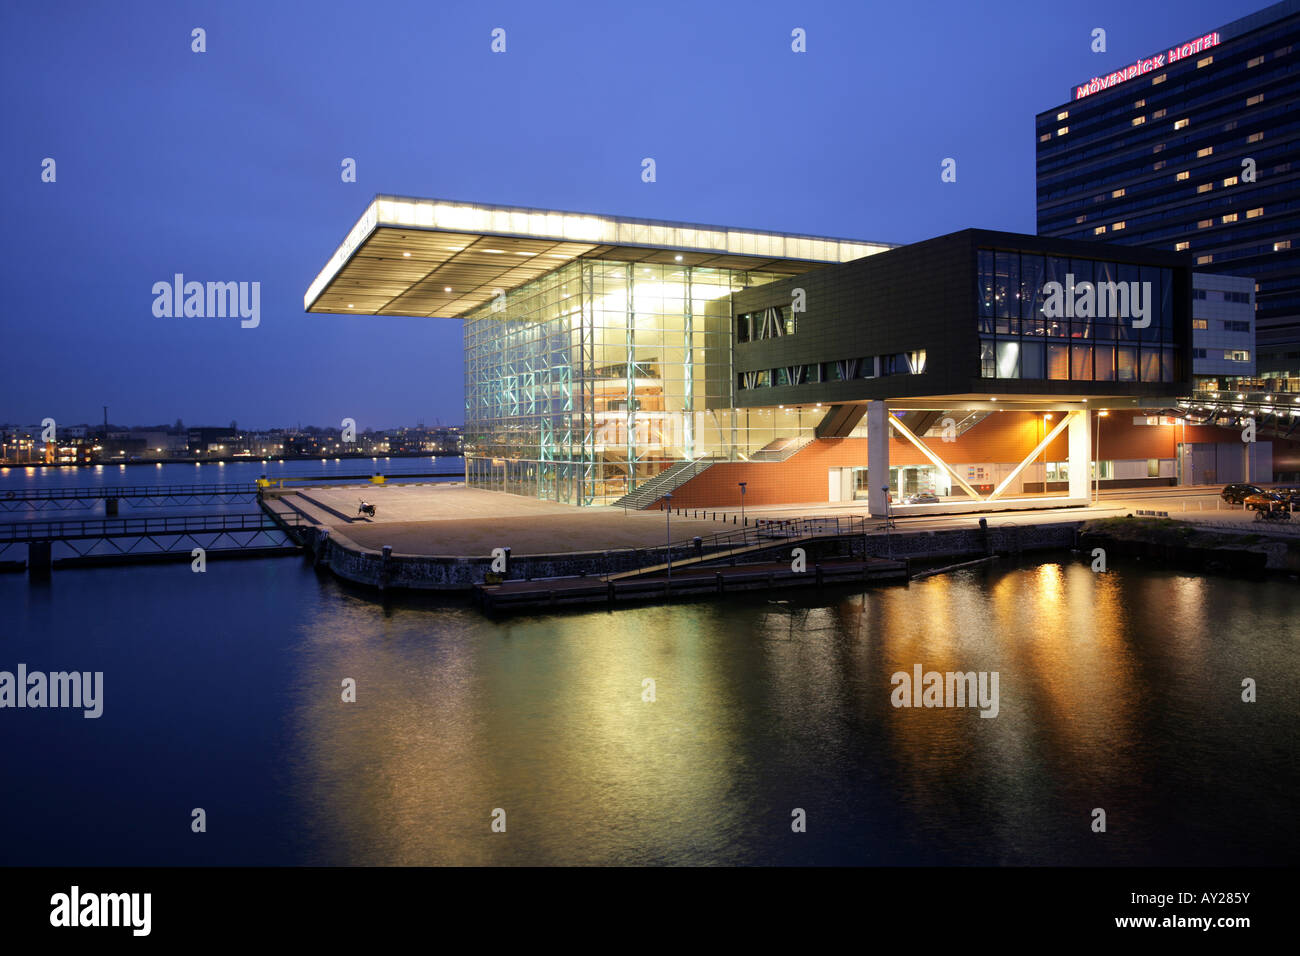 NLD Paesi Bassi Amsterdam Concerthall Muziekgebouw aan TJI Foto Stock